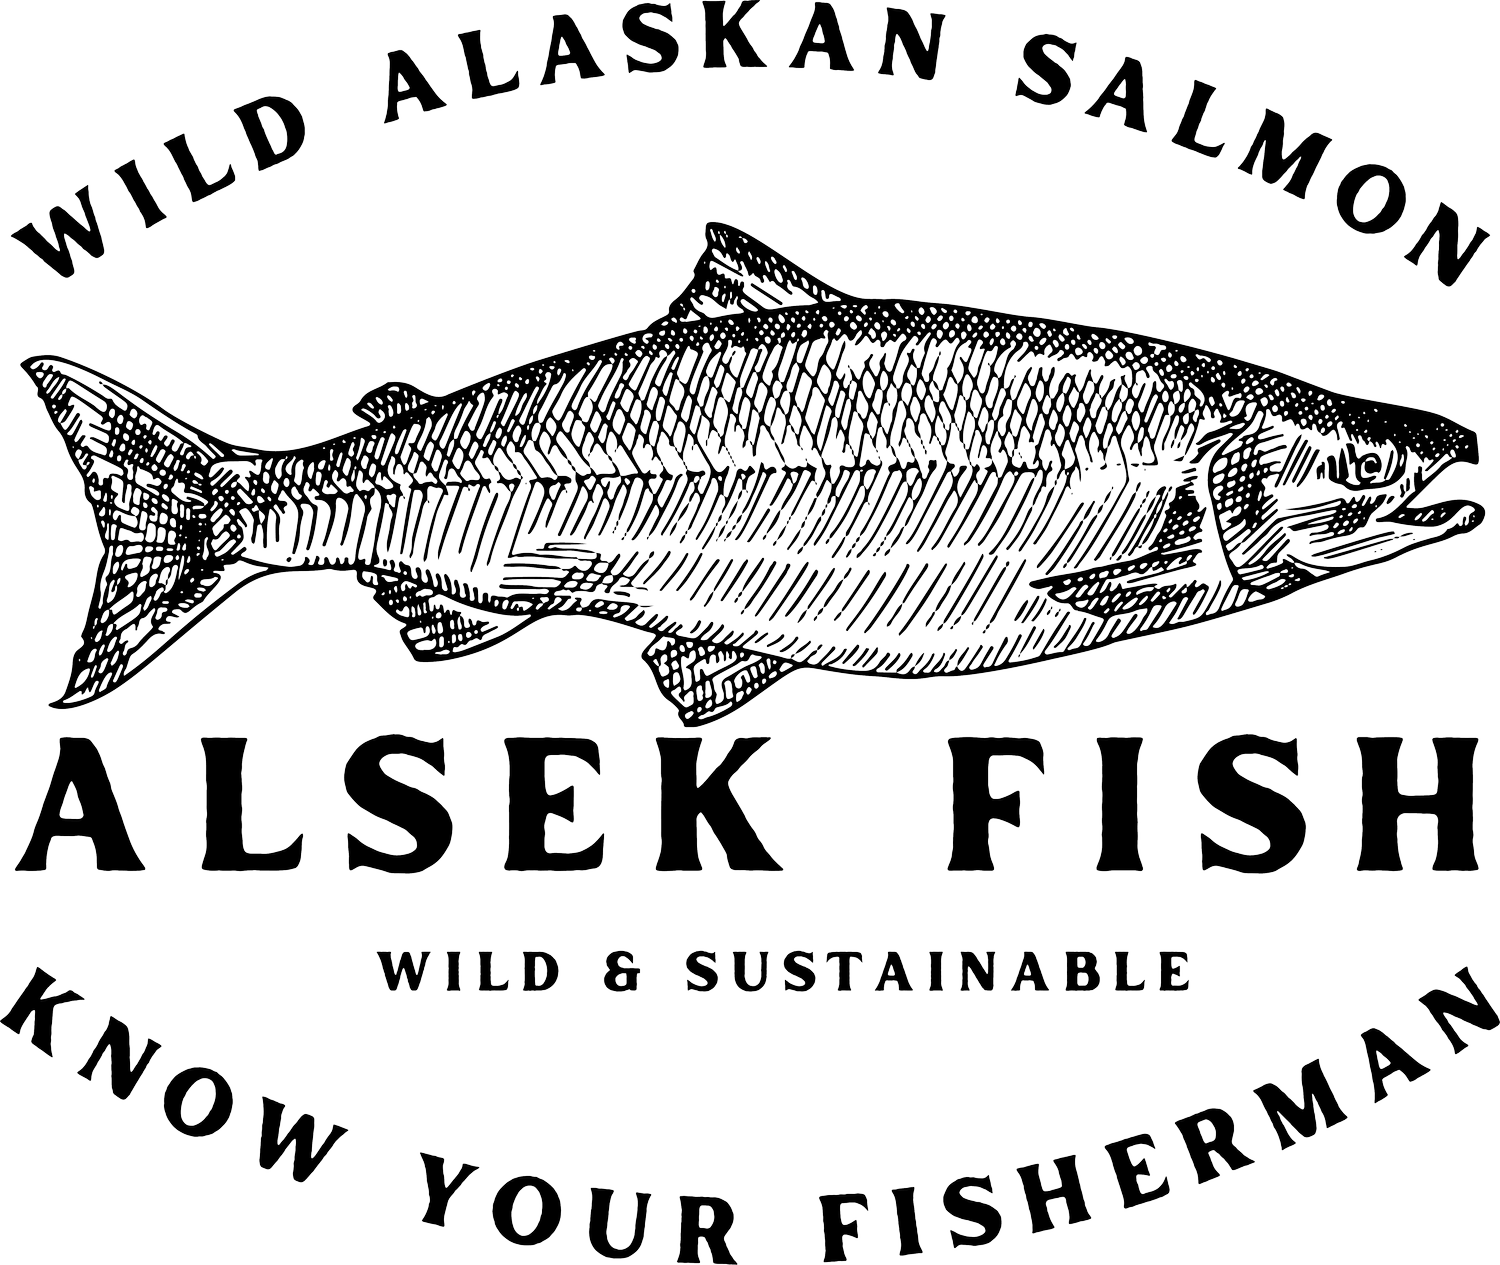 www.alsekfish.com